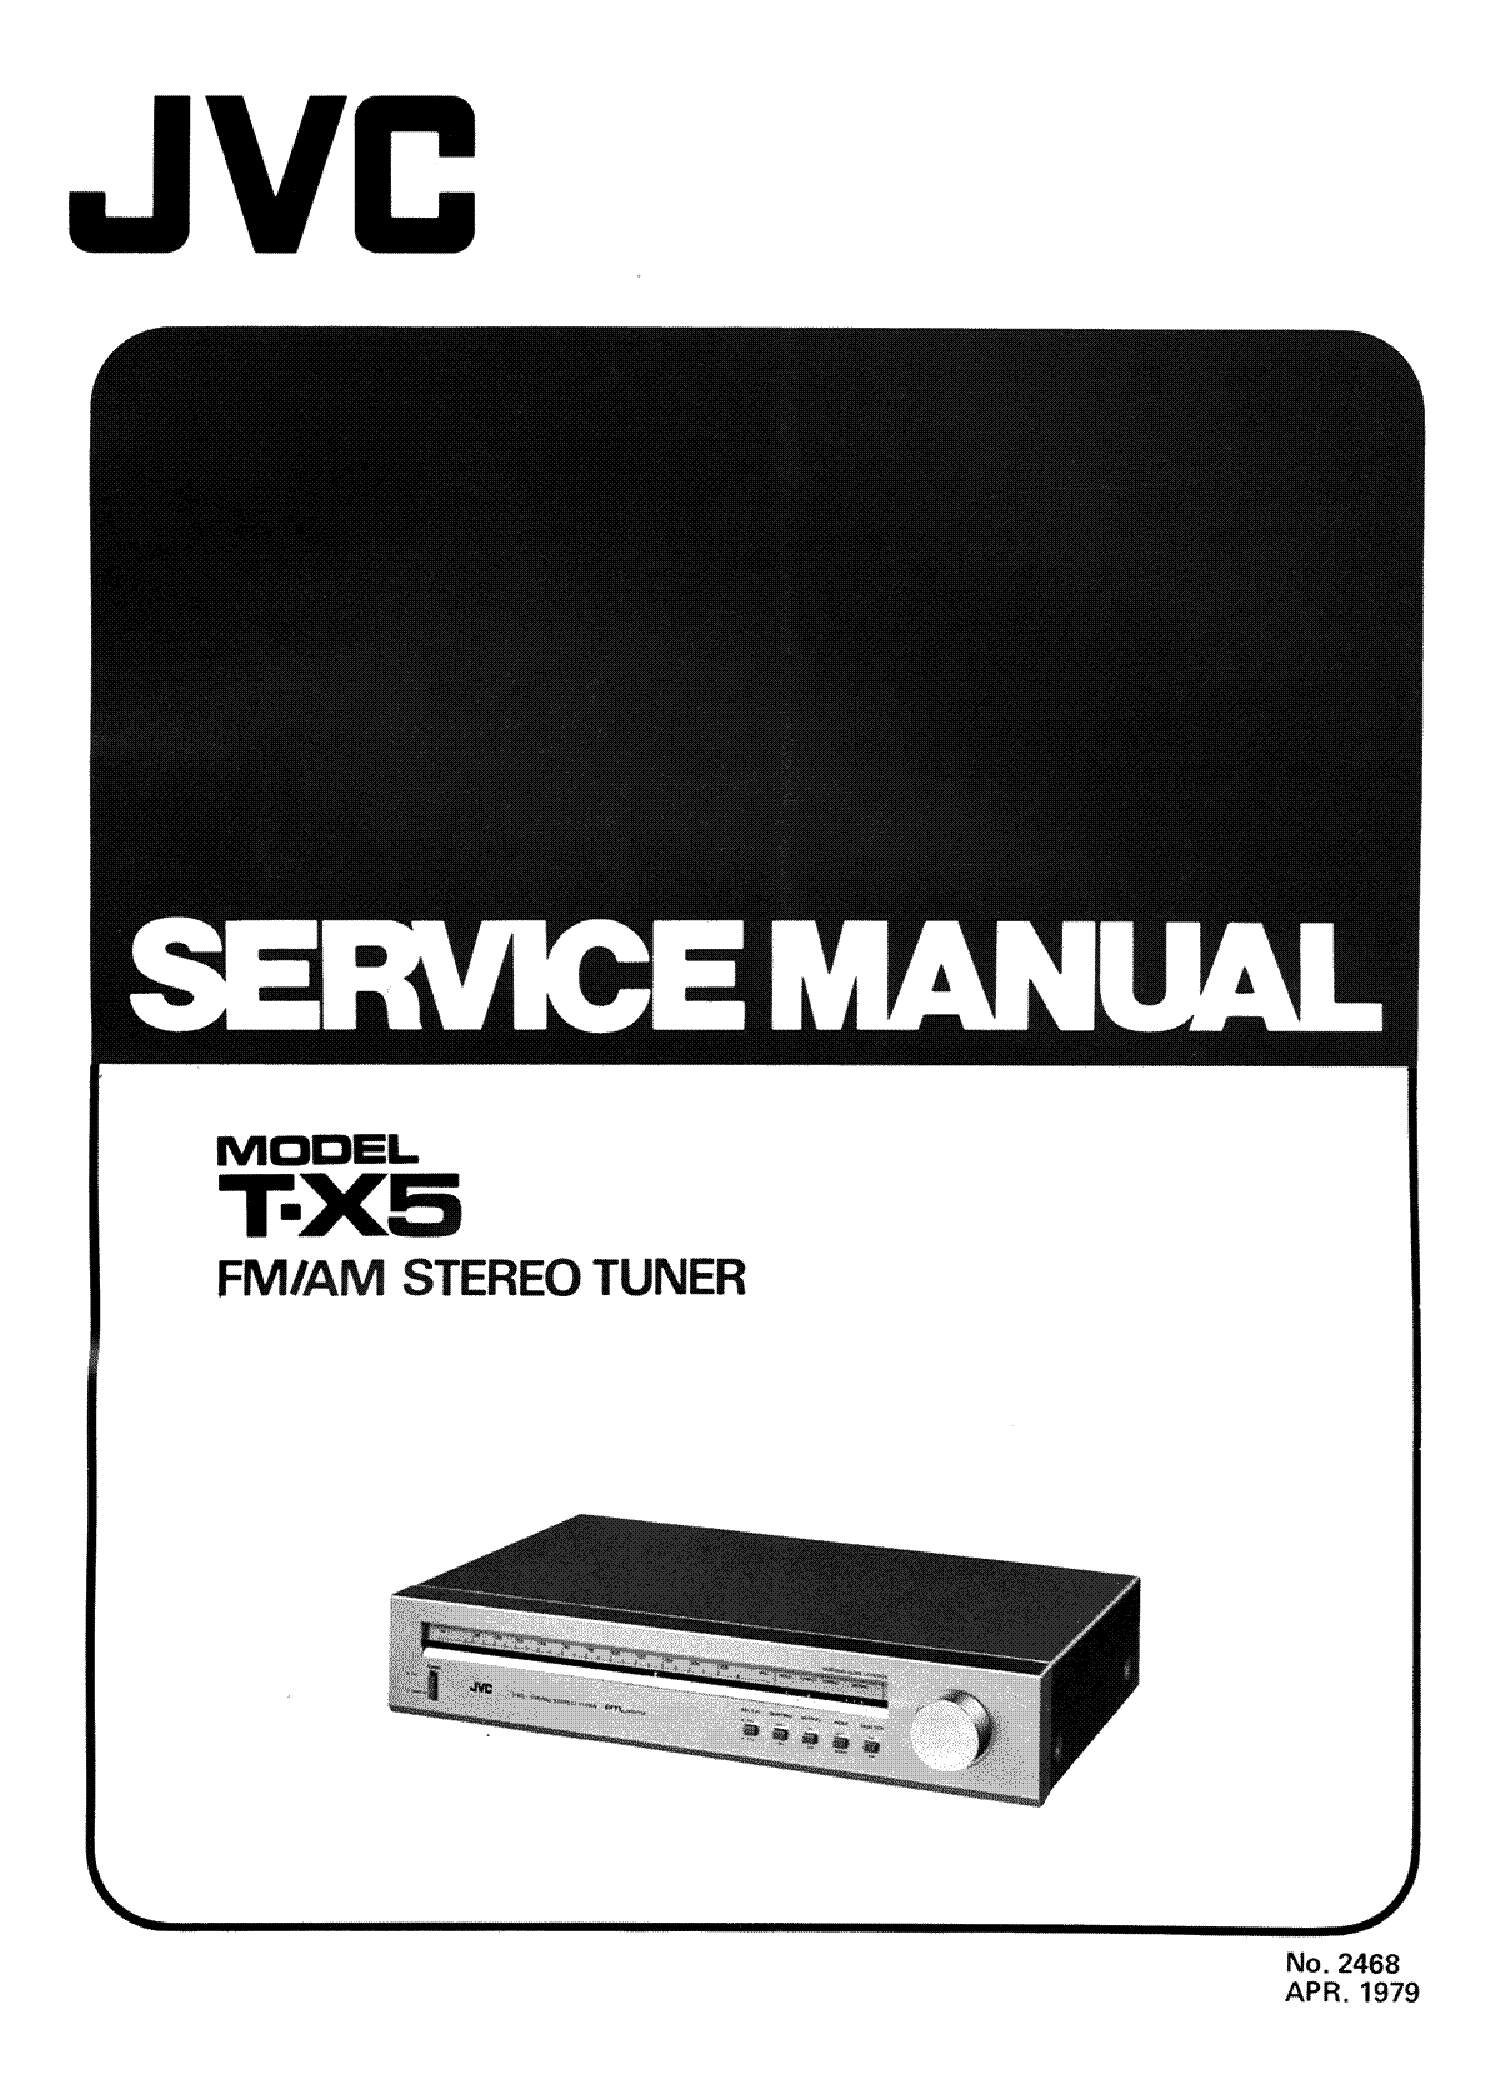 JVC T-X5 SM service manual (2nd page)